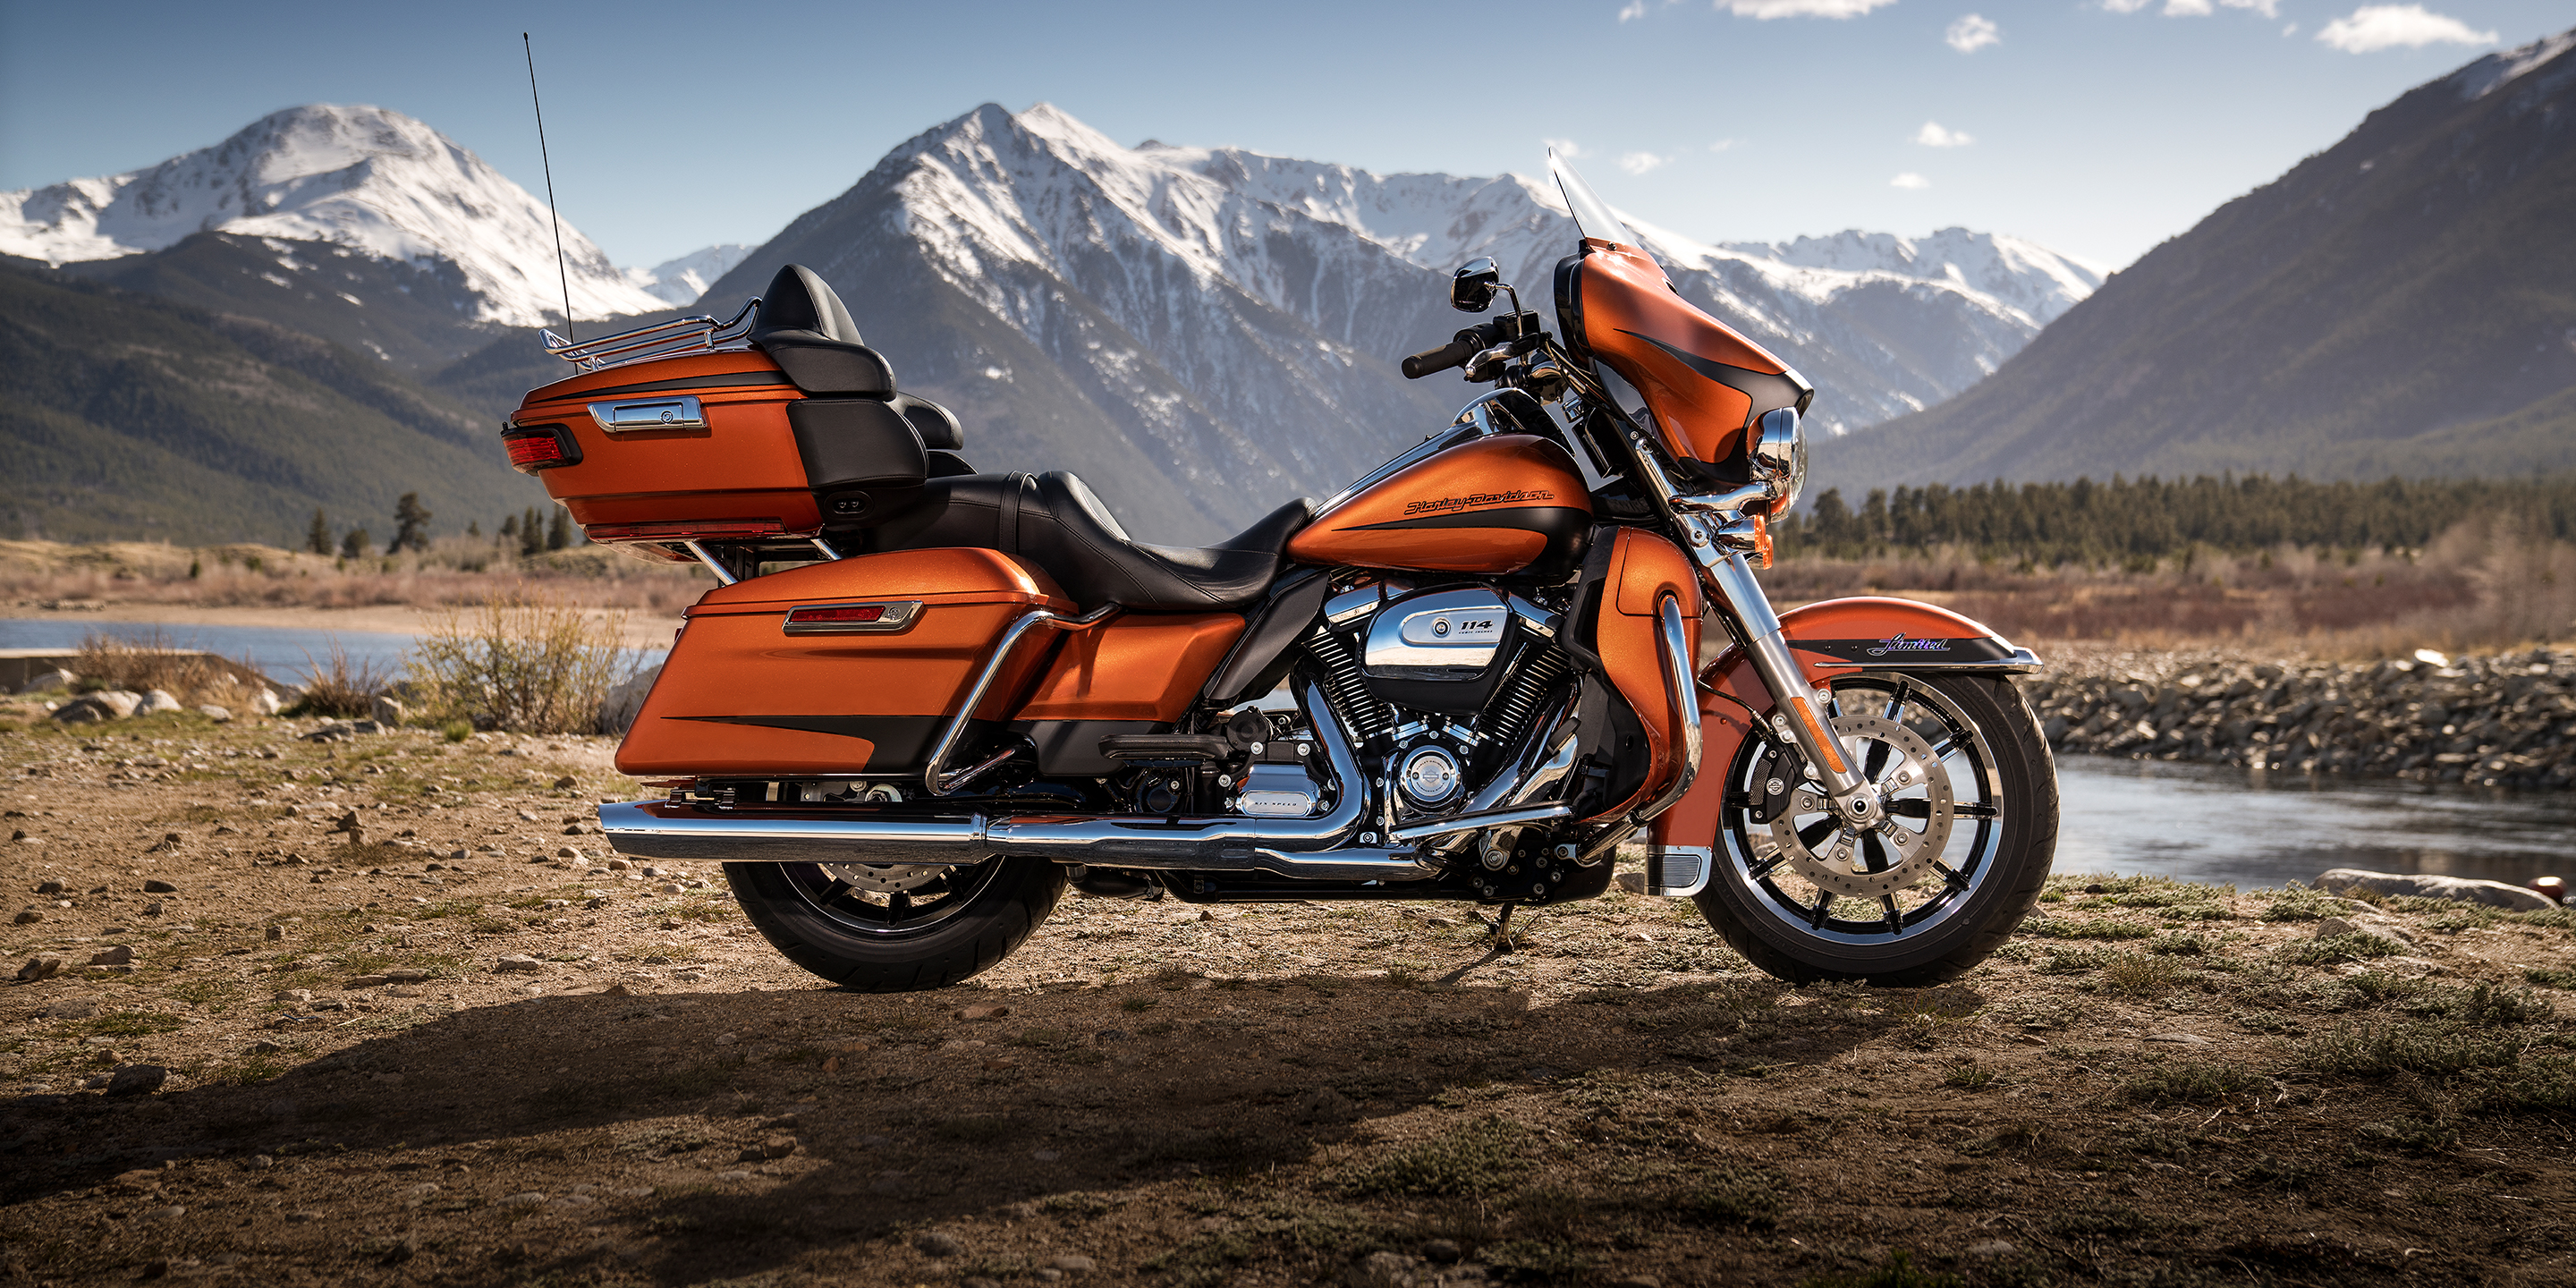 2019 Ultra Limited Motorcycle | Harley-Davidson Canada